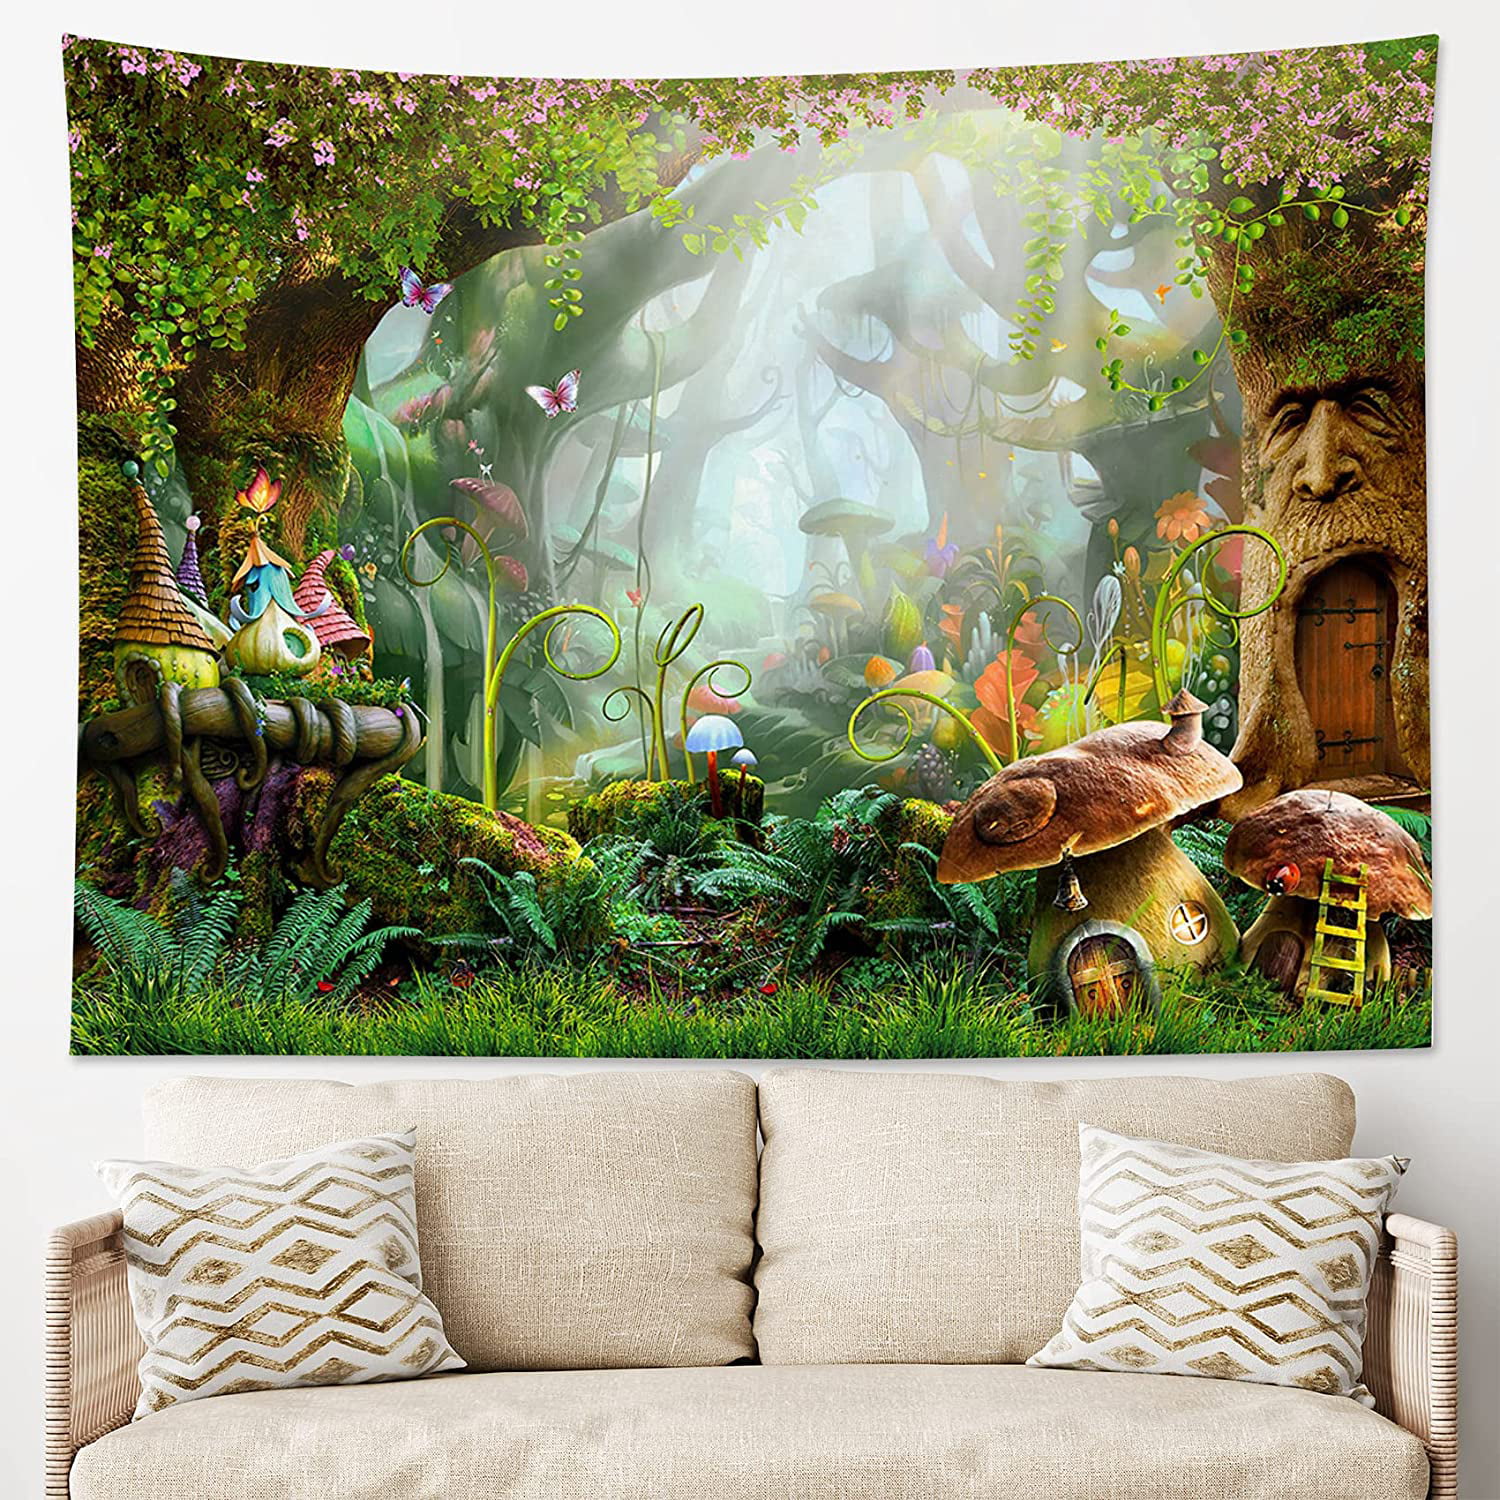 Enchanted Tree Lanterns TAPESTRY 60x80" Fantasy Hanging Fabric Wall Decor Art 